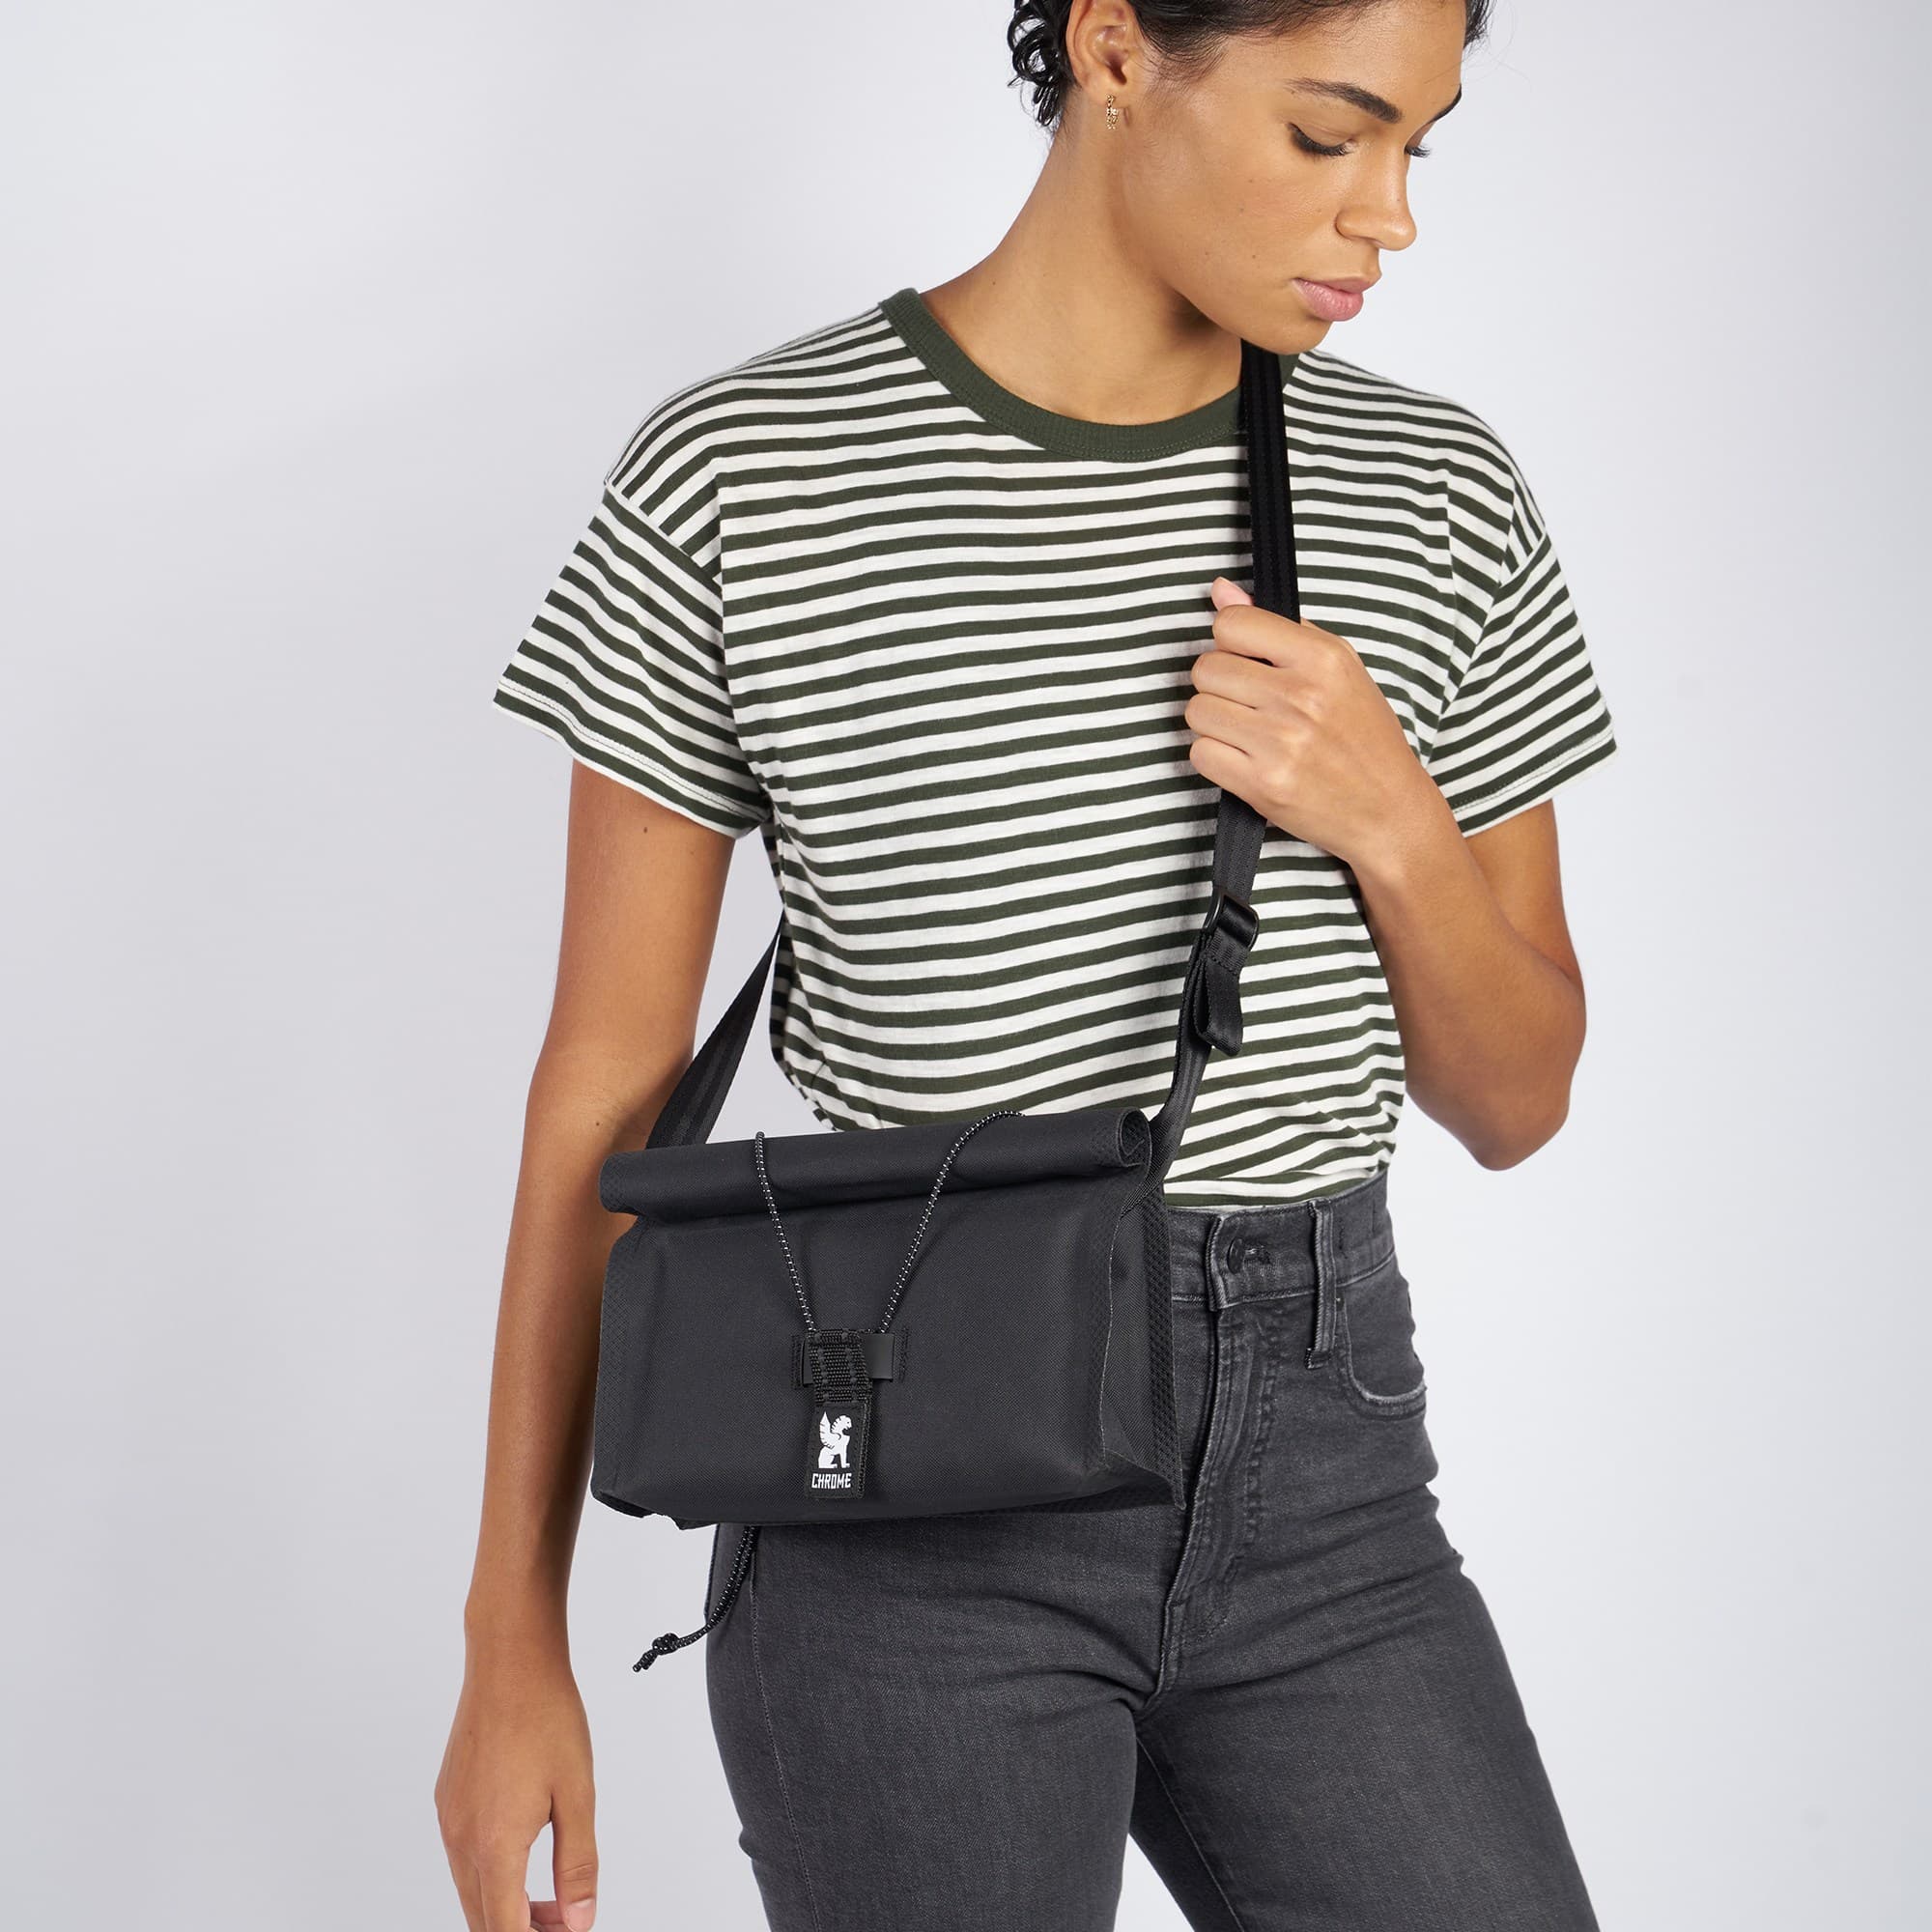 Urban Ex handlebar bag worn by a woman as a sling